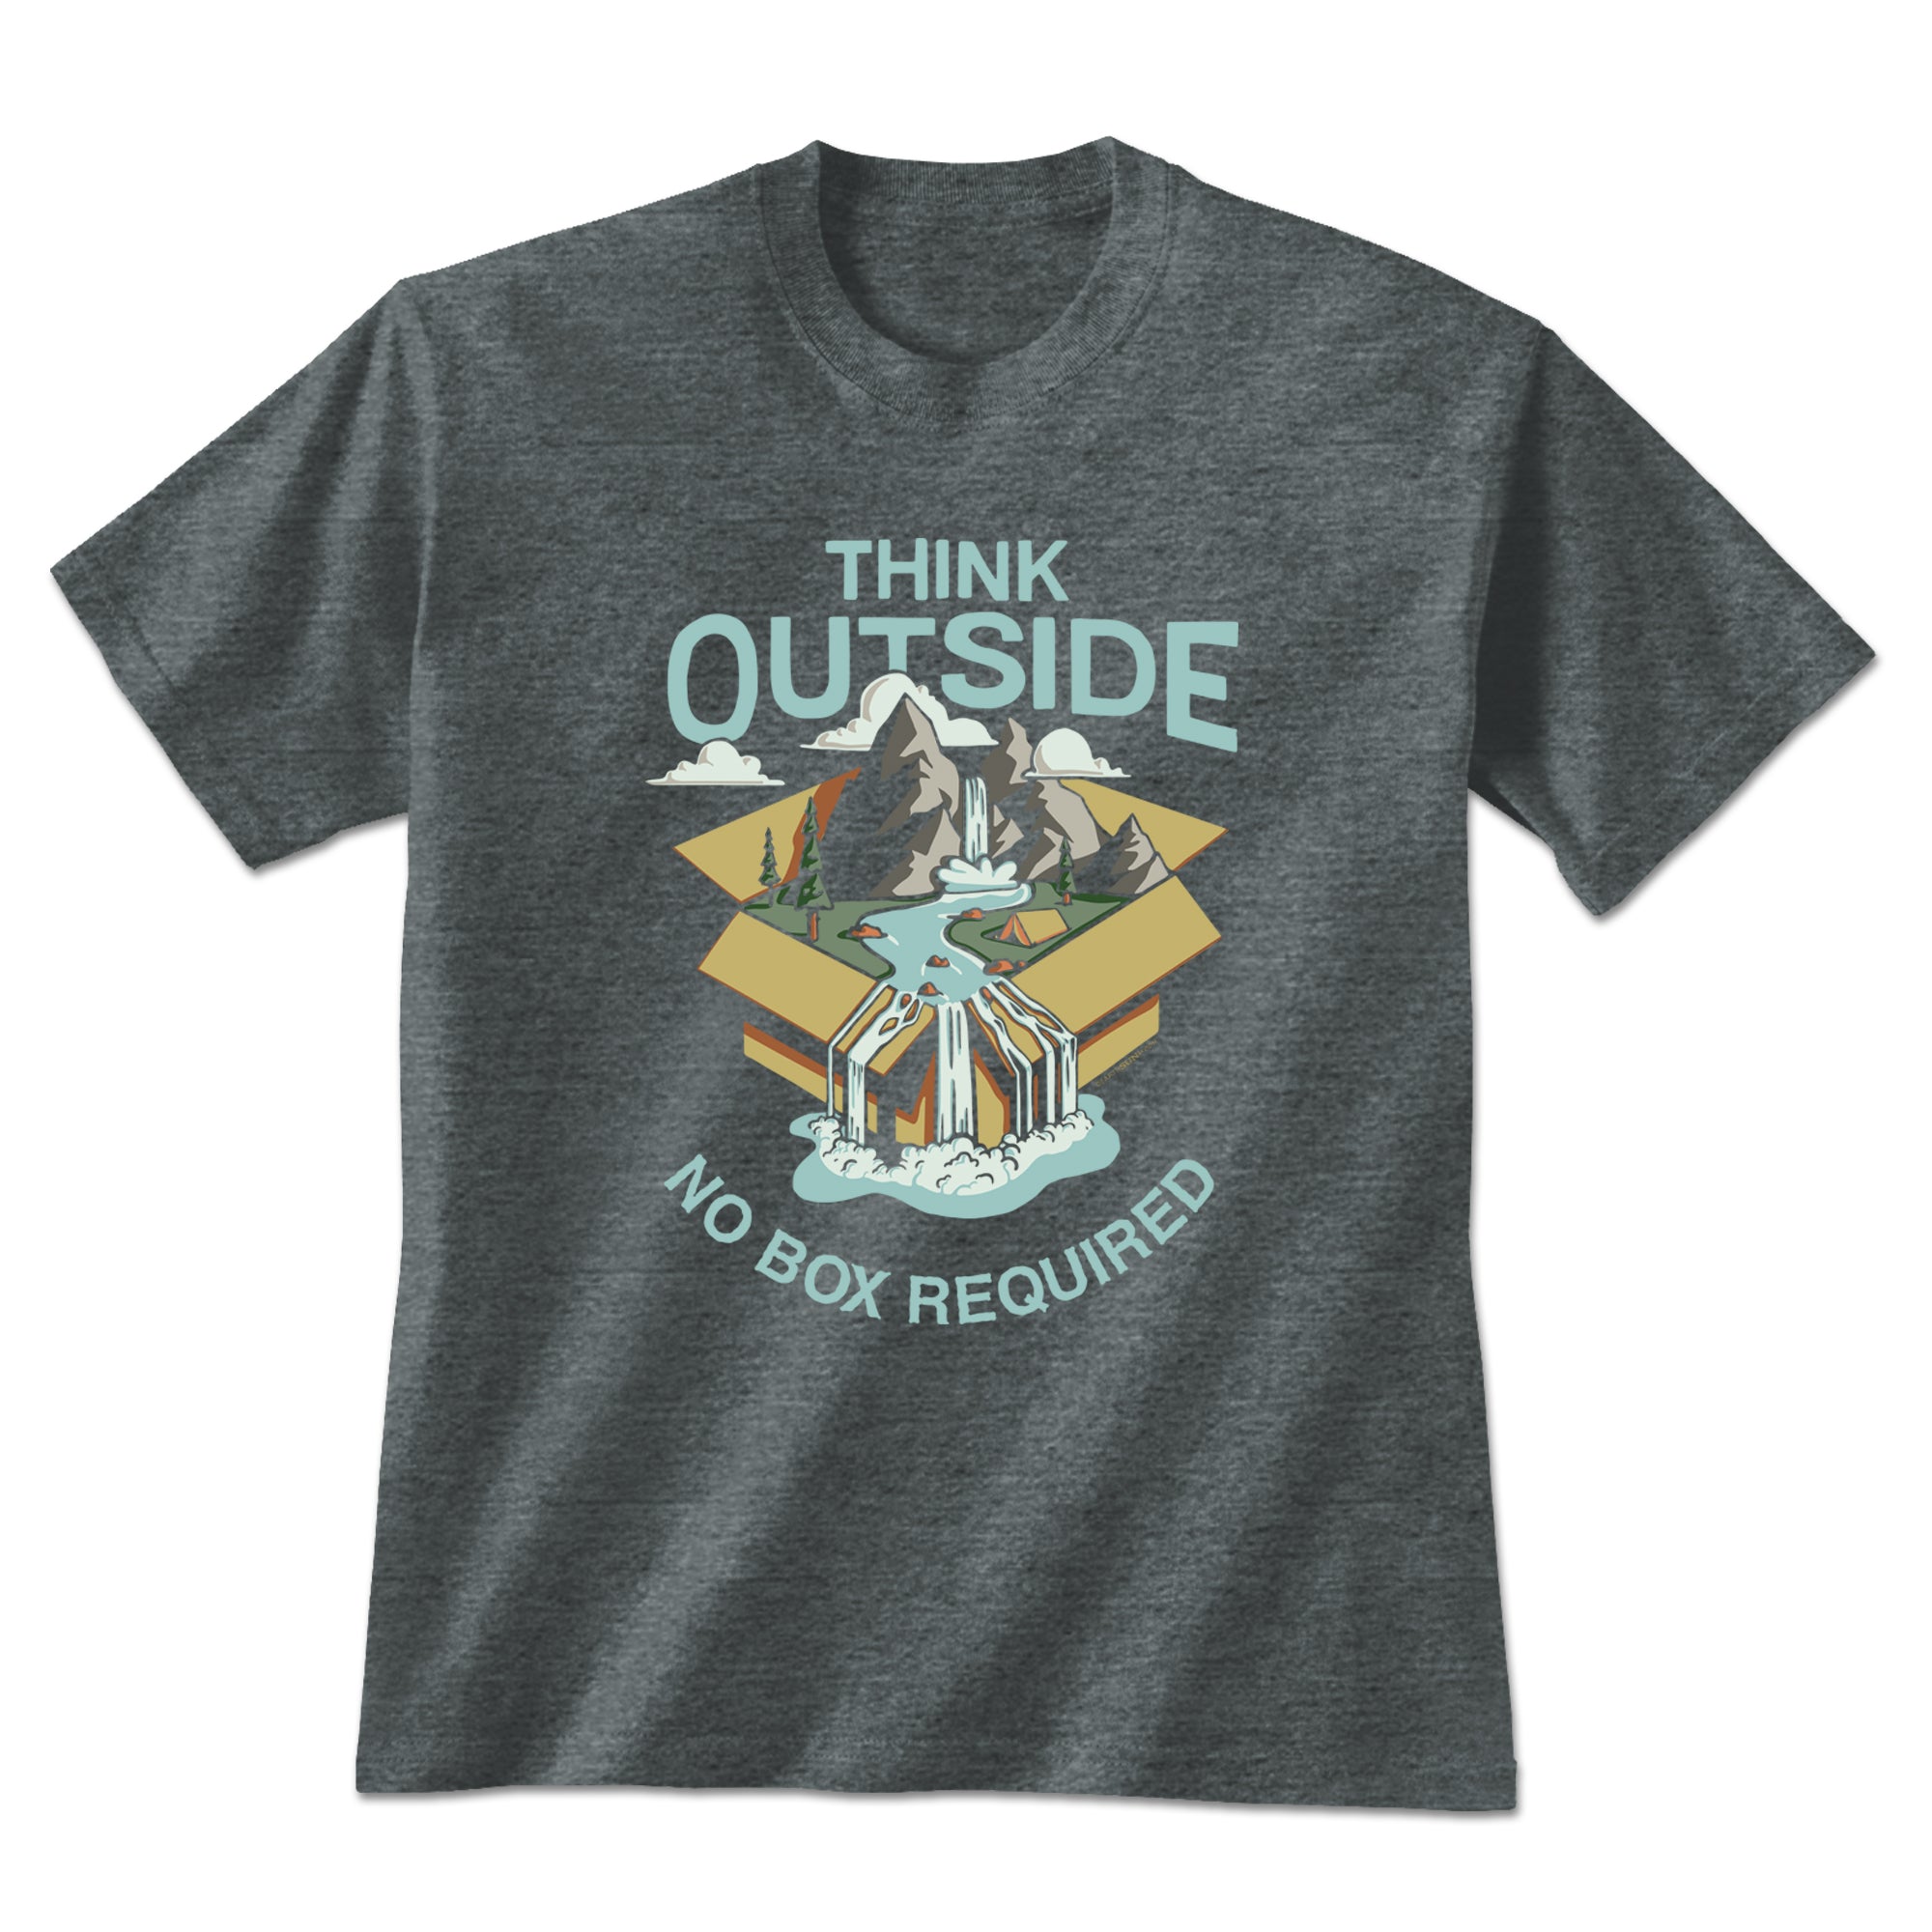 Think Outside - Wild T-Shirt - Dark Heather - Small